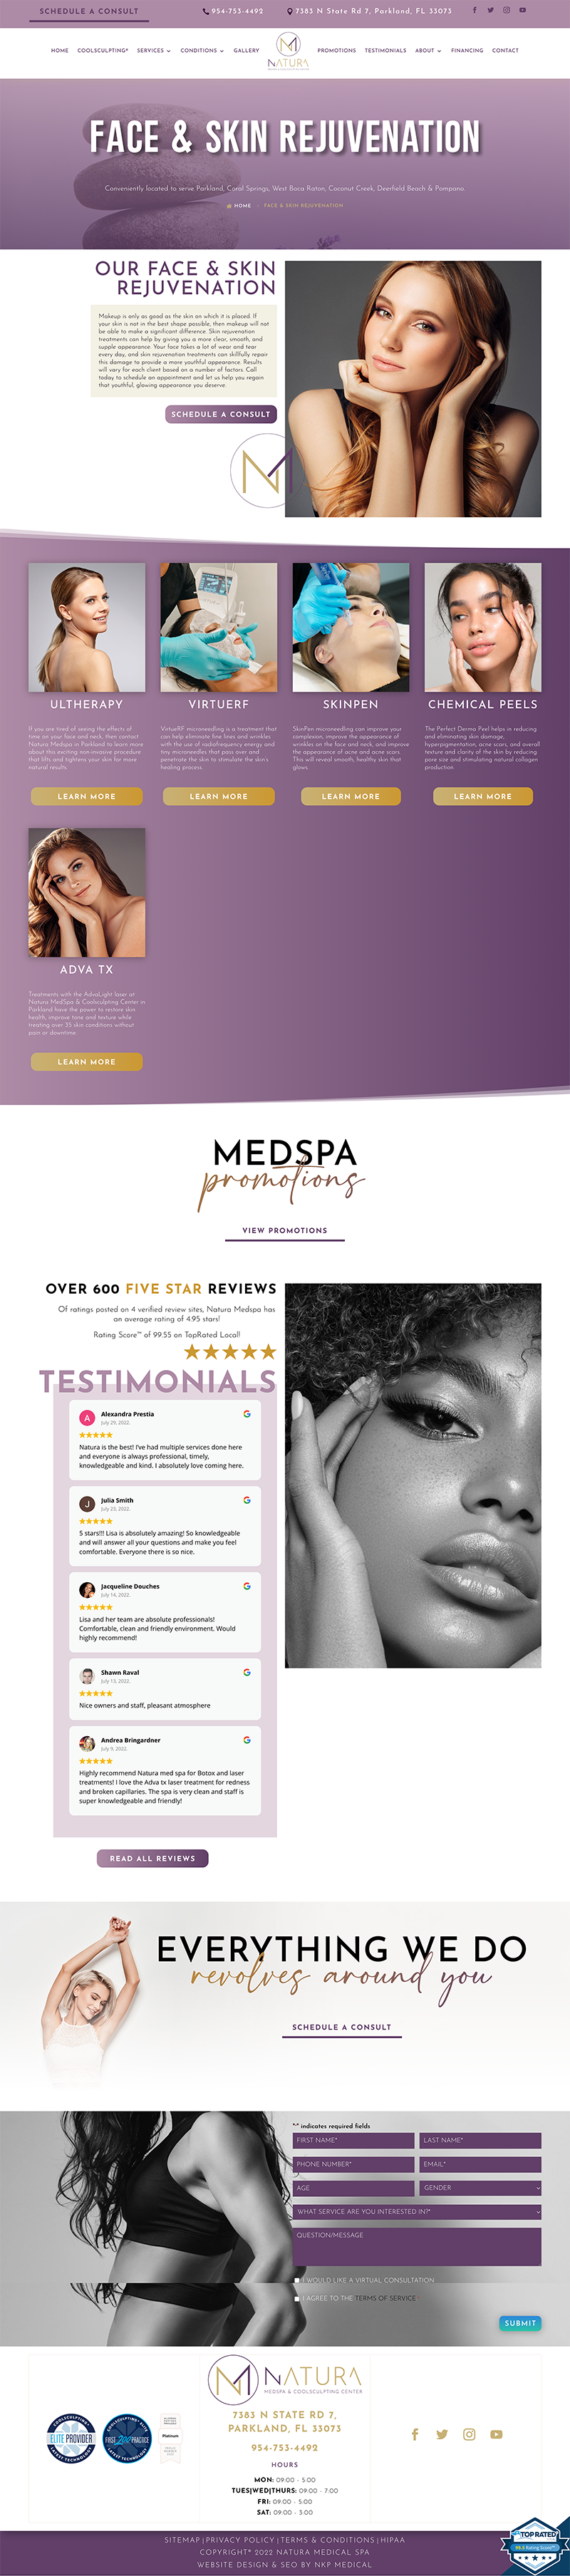 Natura Medspa Parent Page - Brand and Web Design Agency